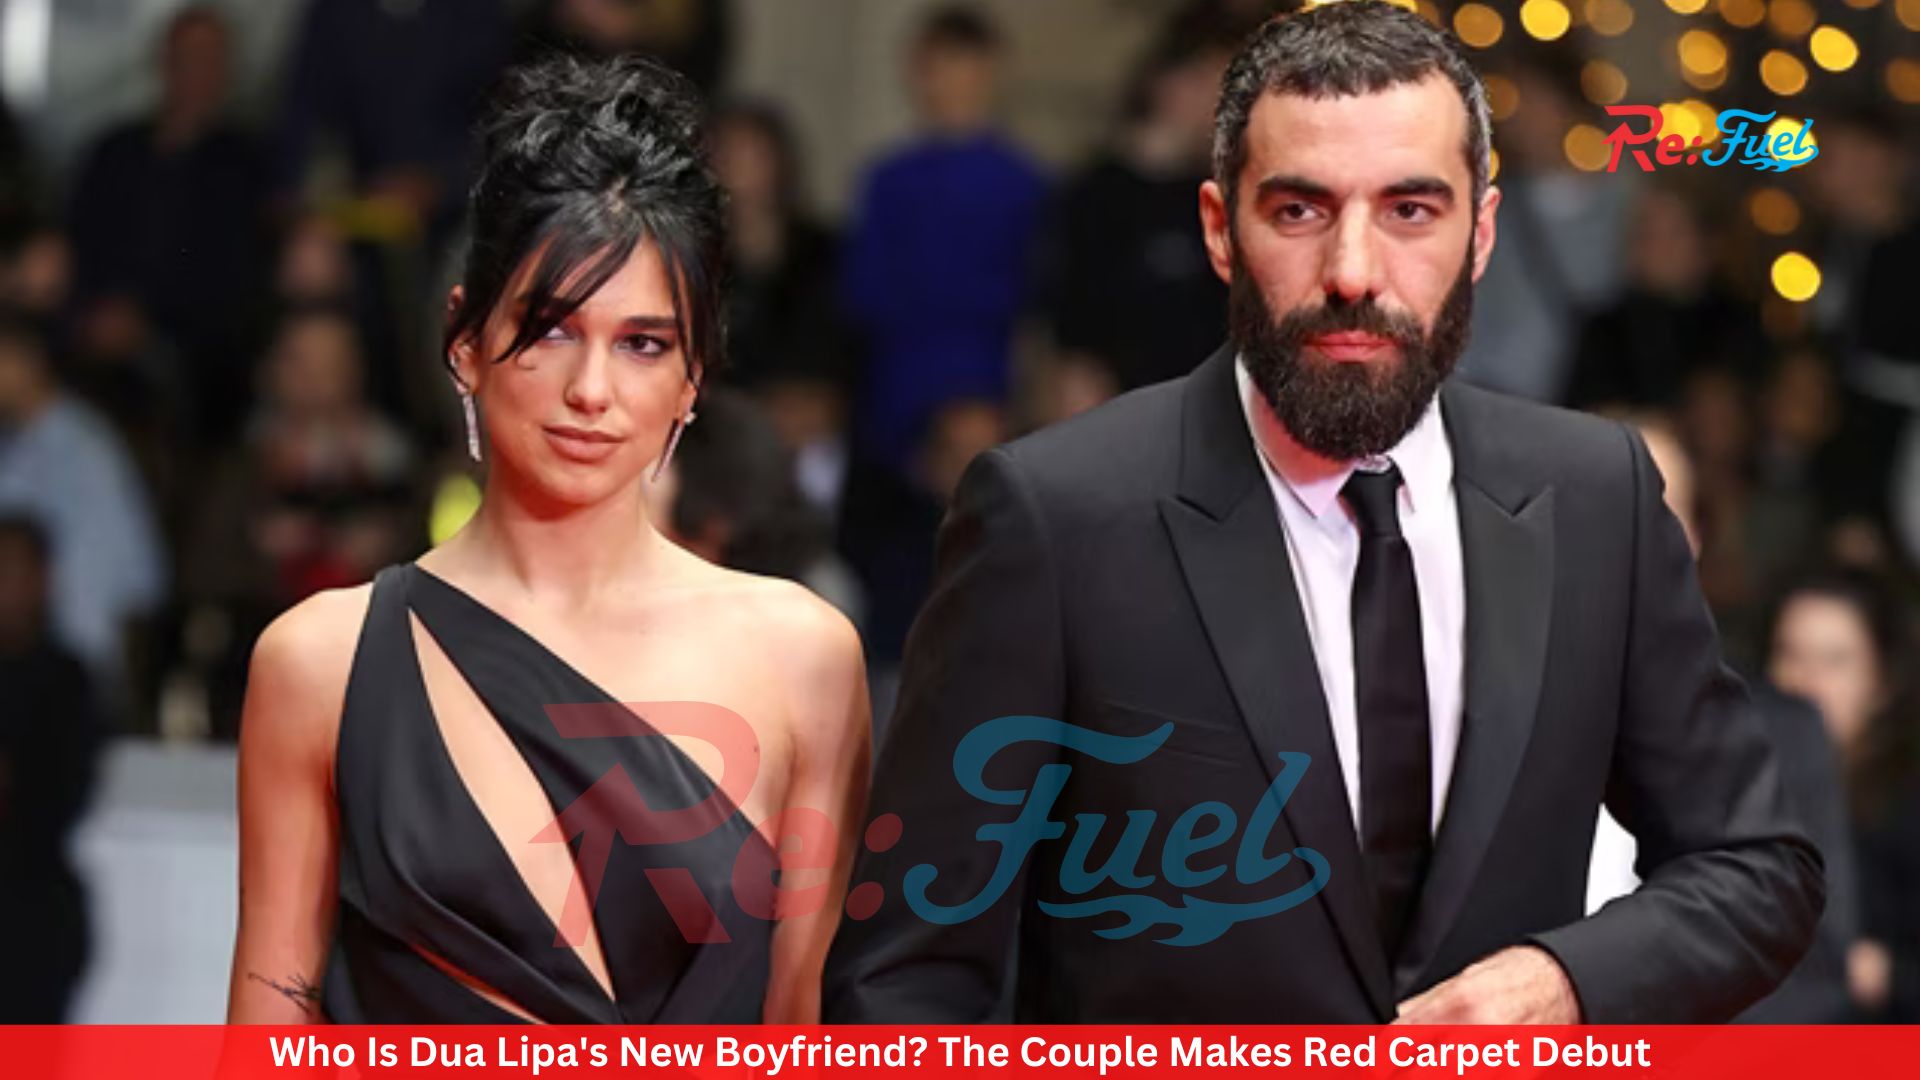 Who Is Dua Lipa's New Boyfriend? The Couple Makes Red Carpet Debut